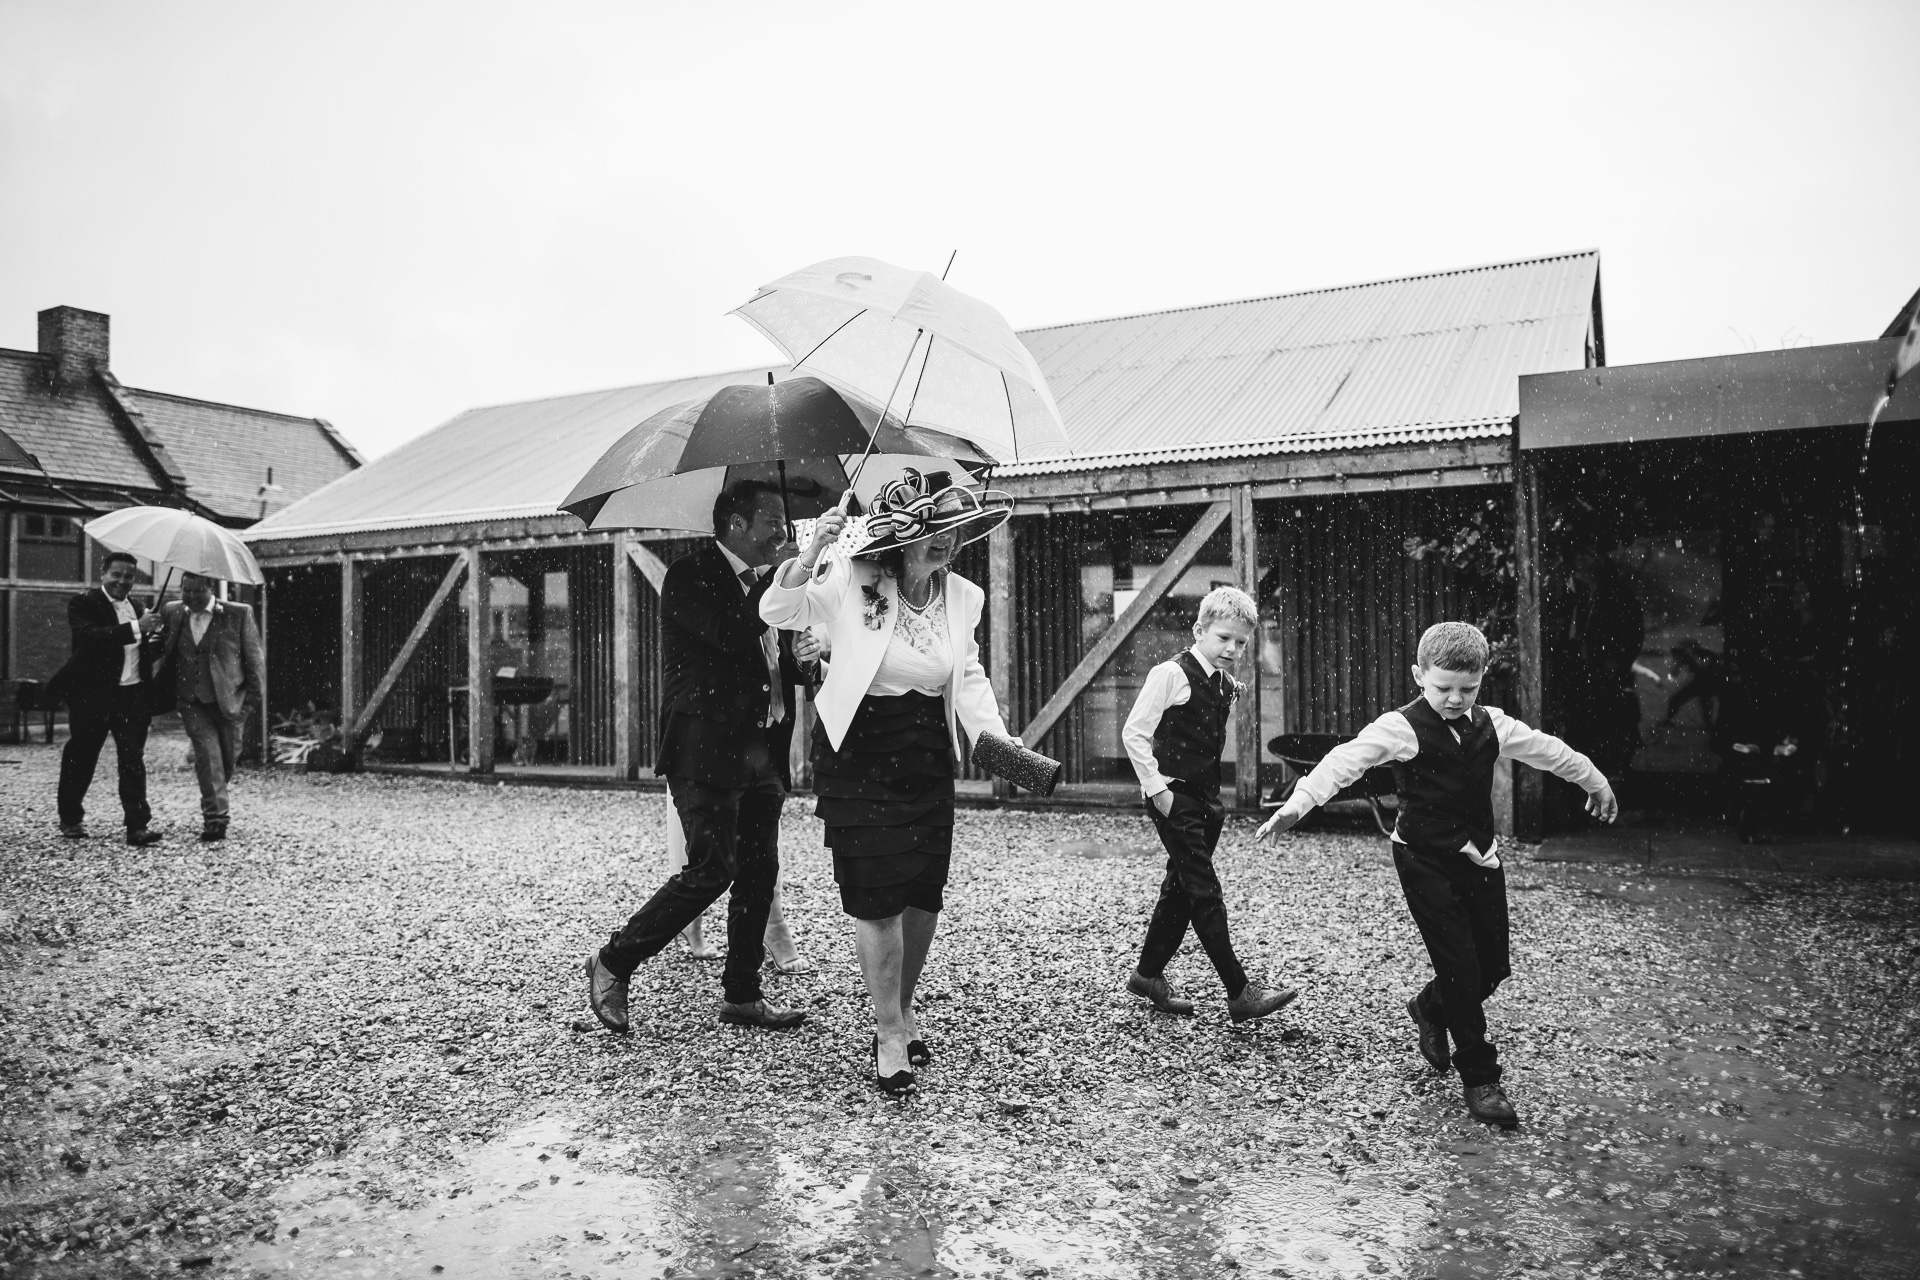 Wedding guests under umbrellas on a rainy wedding day